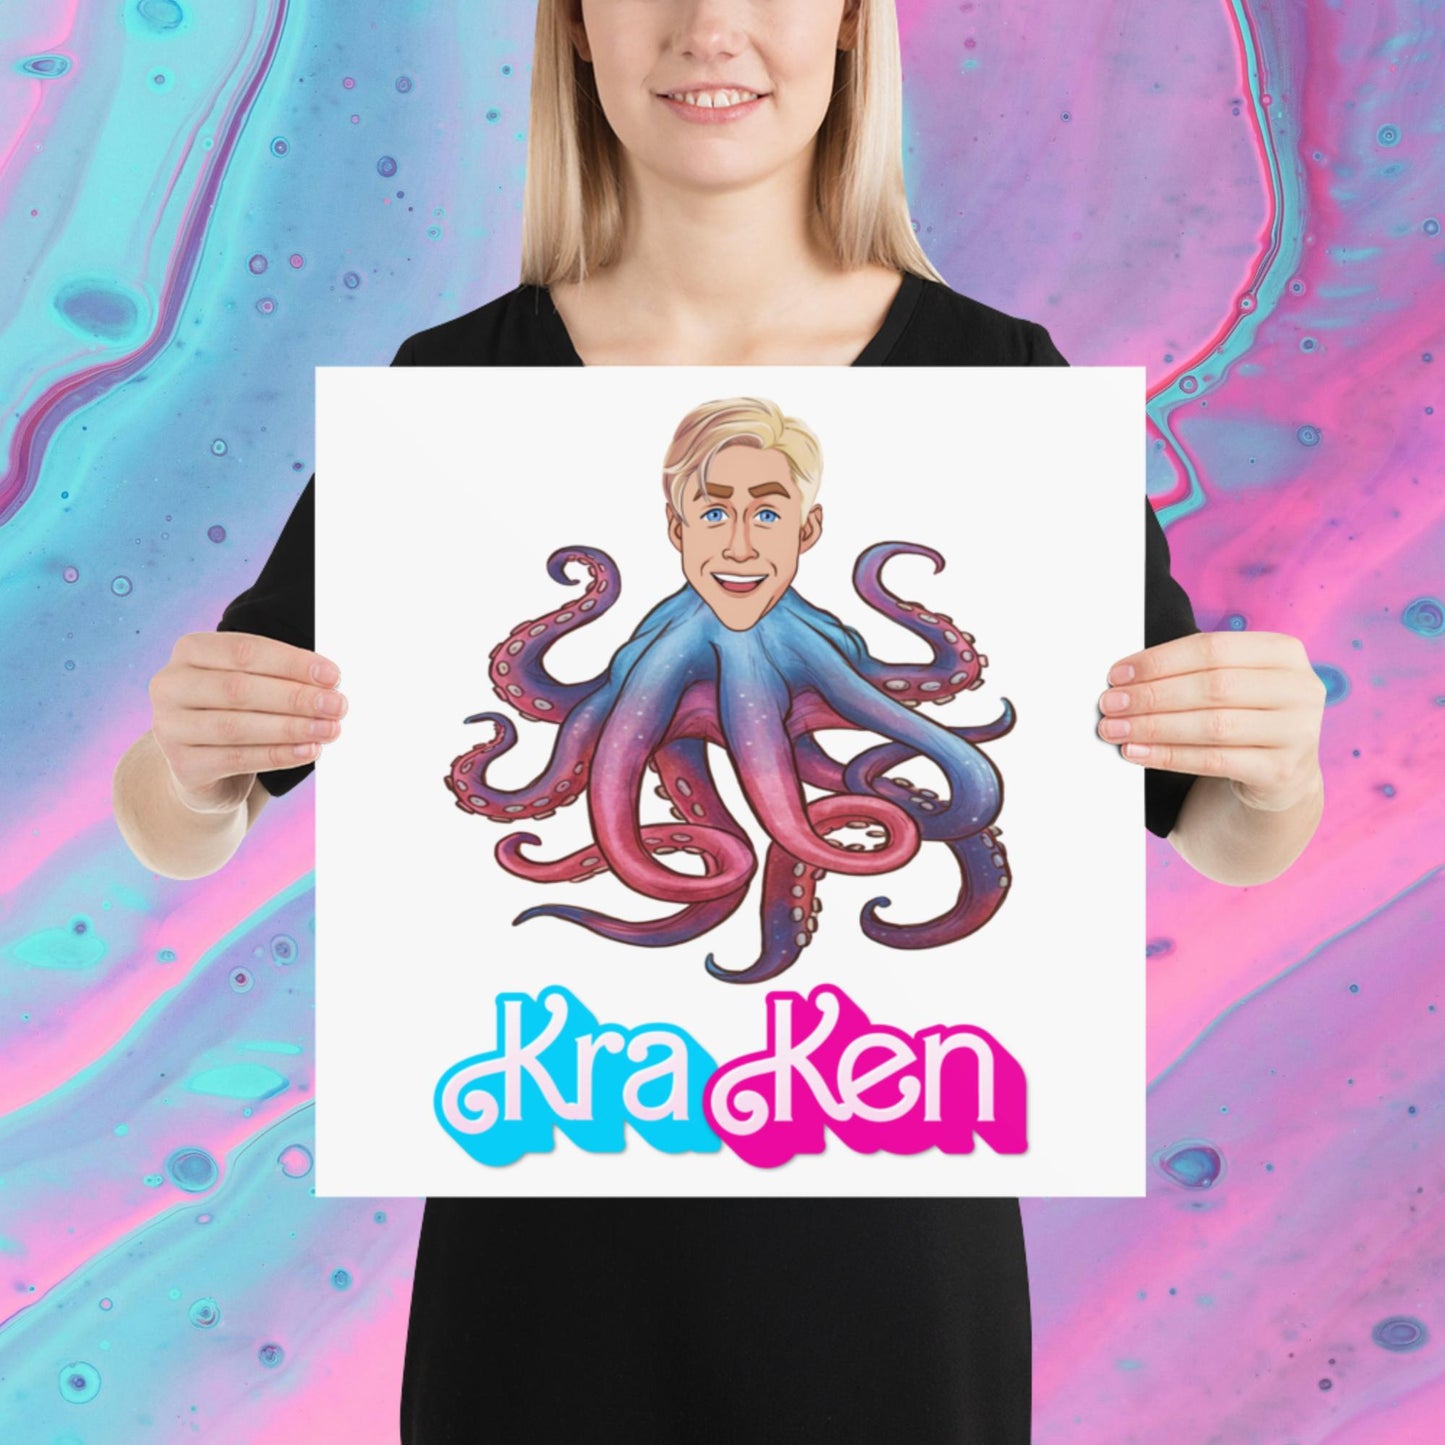 Kraken Ken Barbie Ryan Gosling Funny Poster